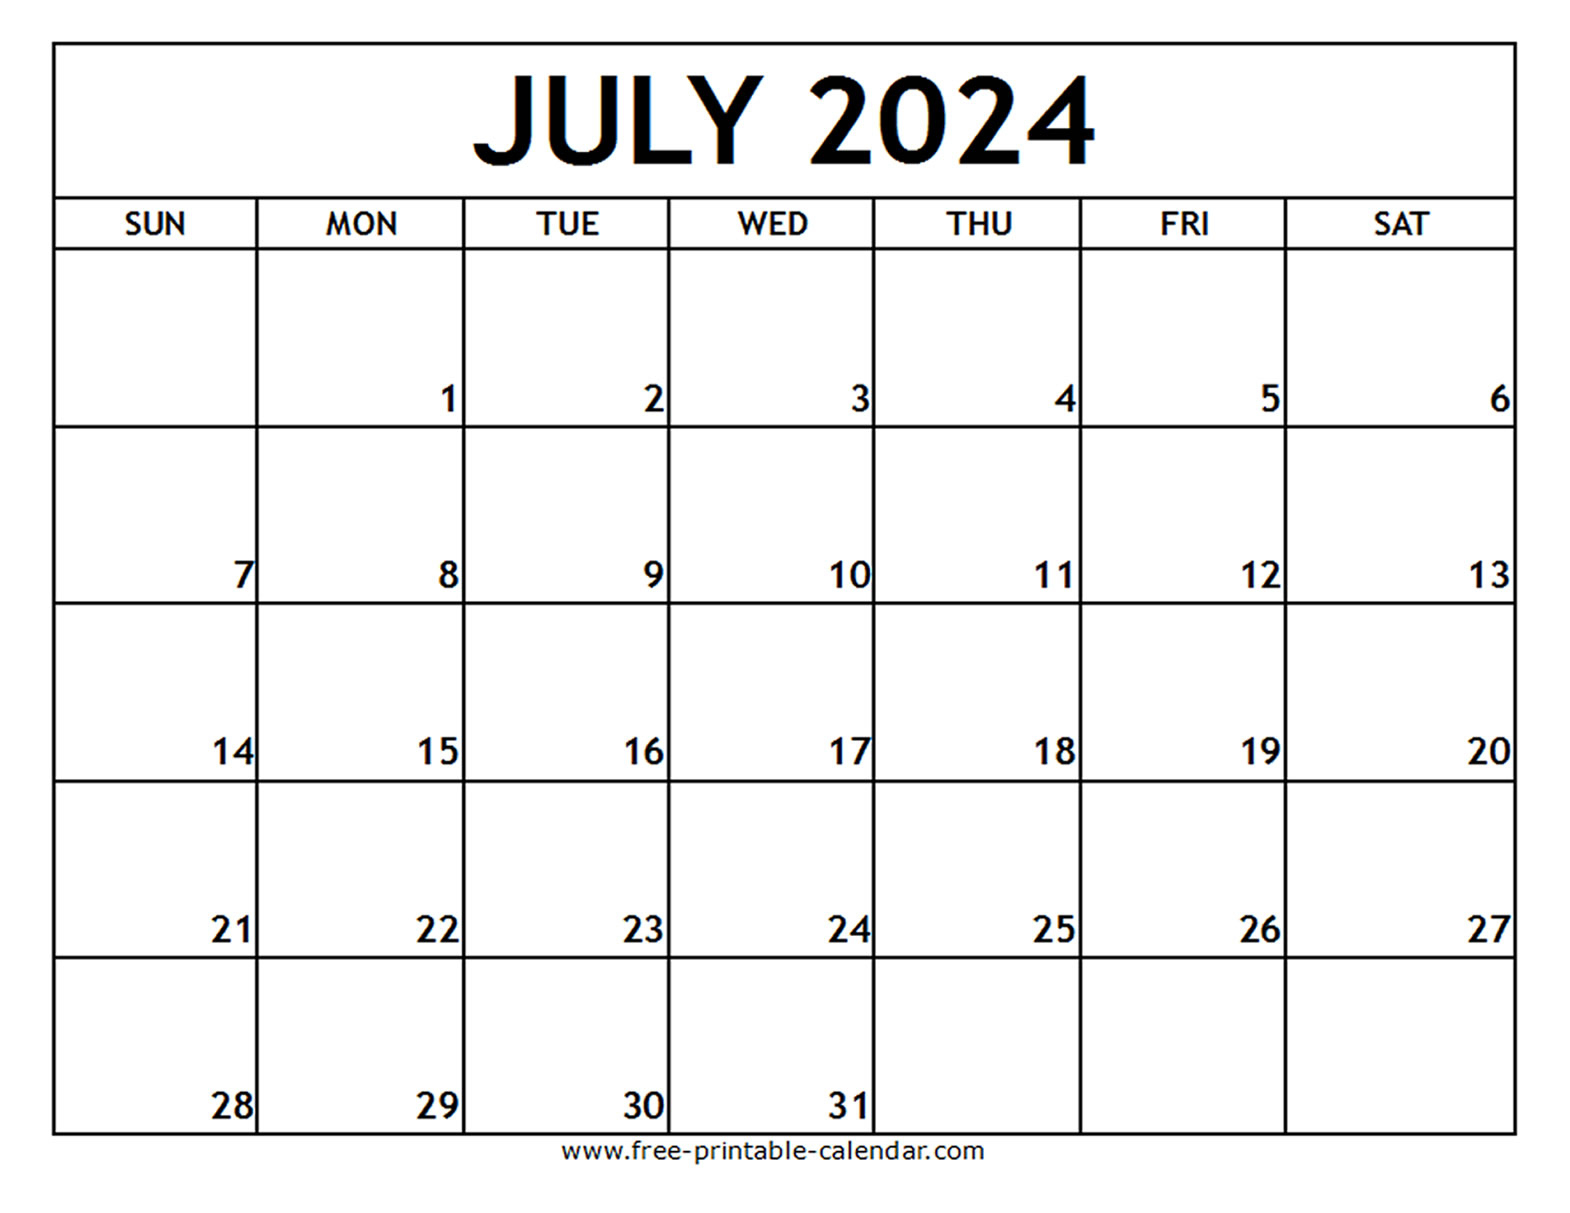 July 2024 Printable Calendar - Free-Printable-Calendar | Free Printable July 2024 Calendar